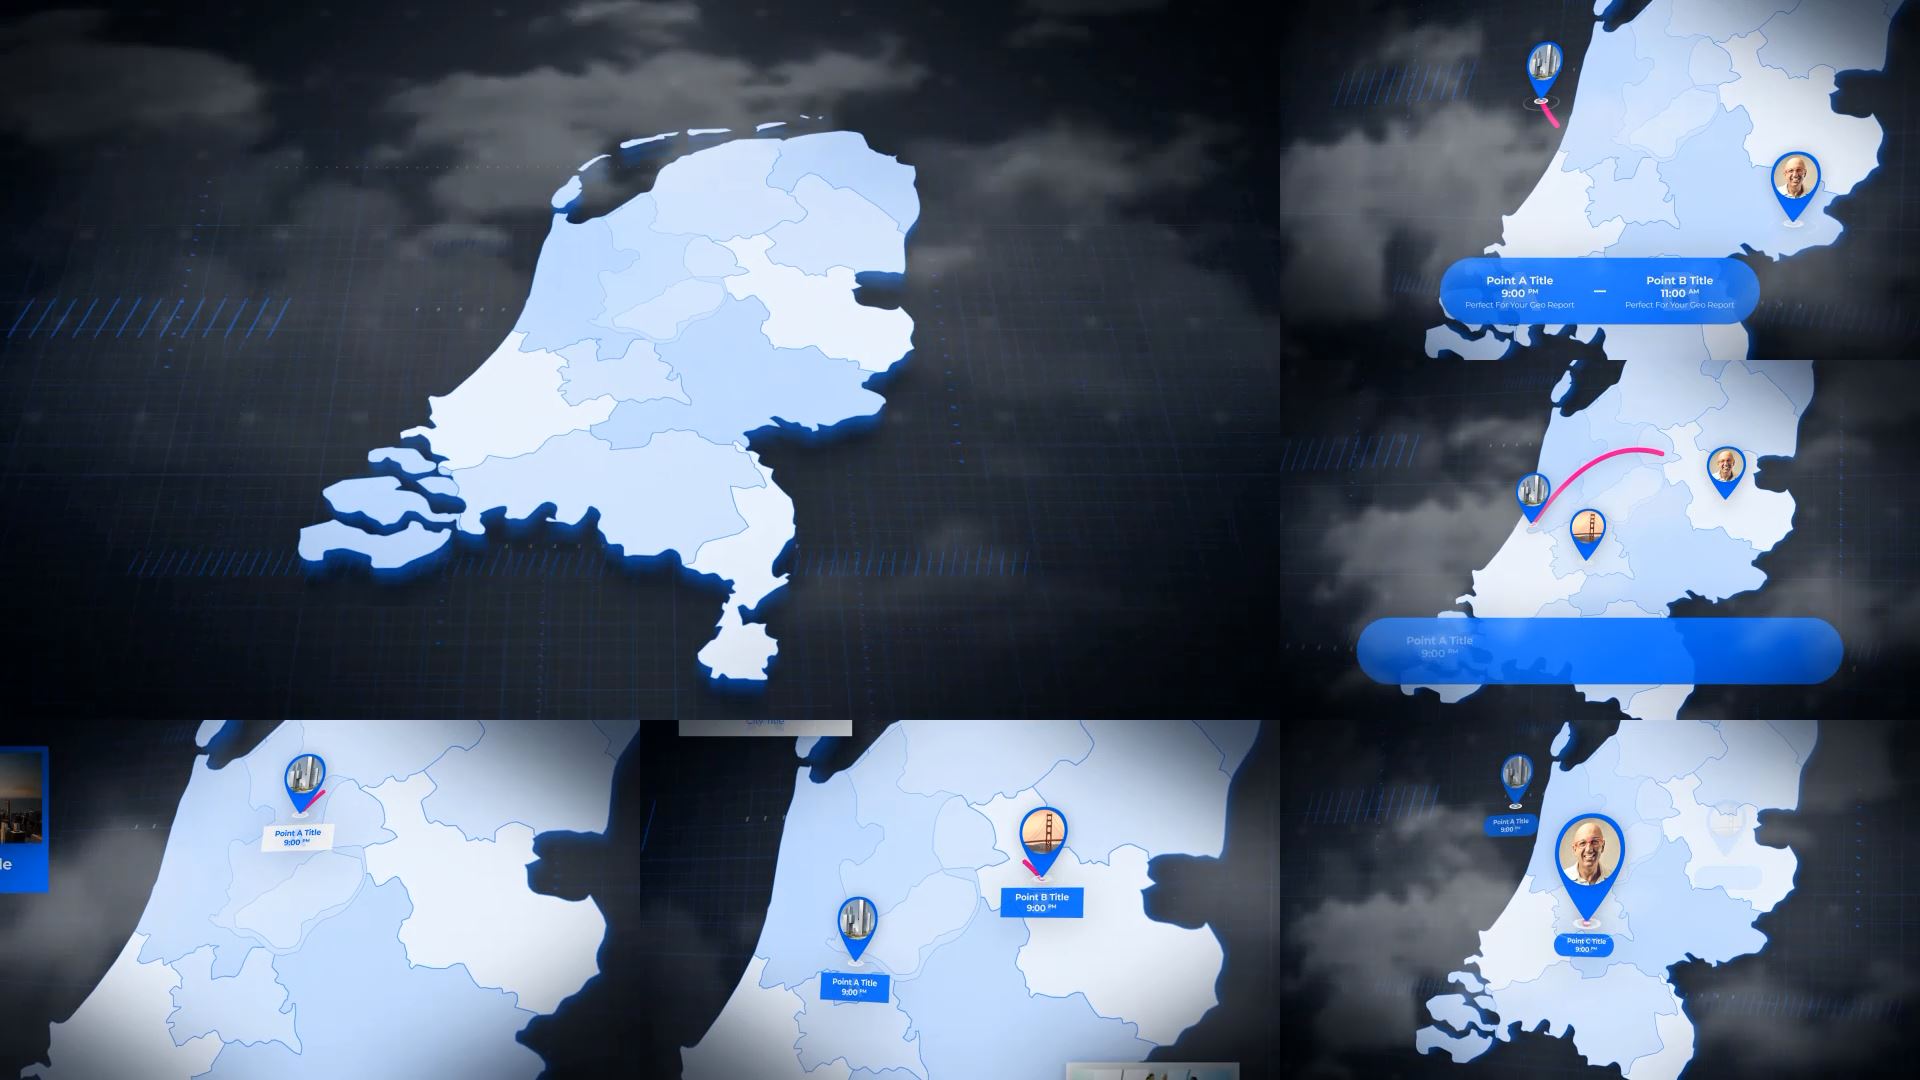  Netherlands Map Kit - Kingdom of the Netherlands Map 